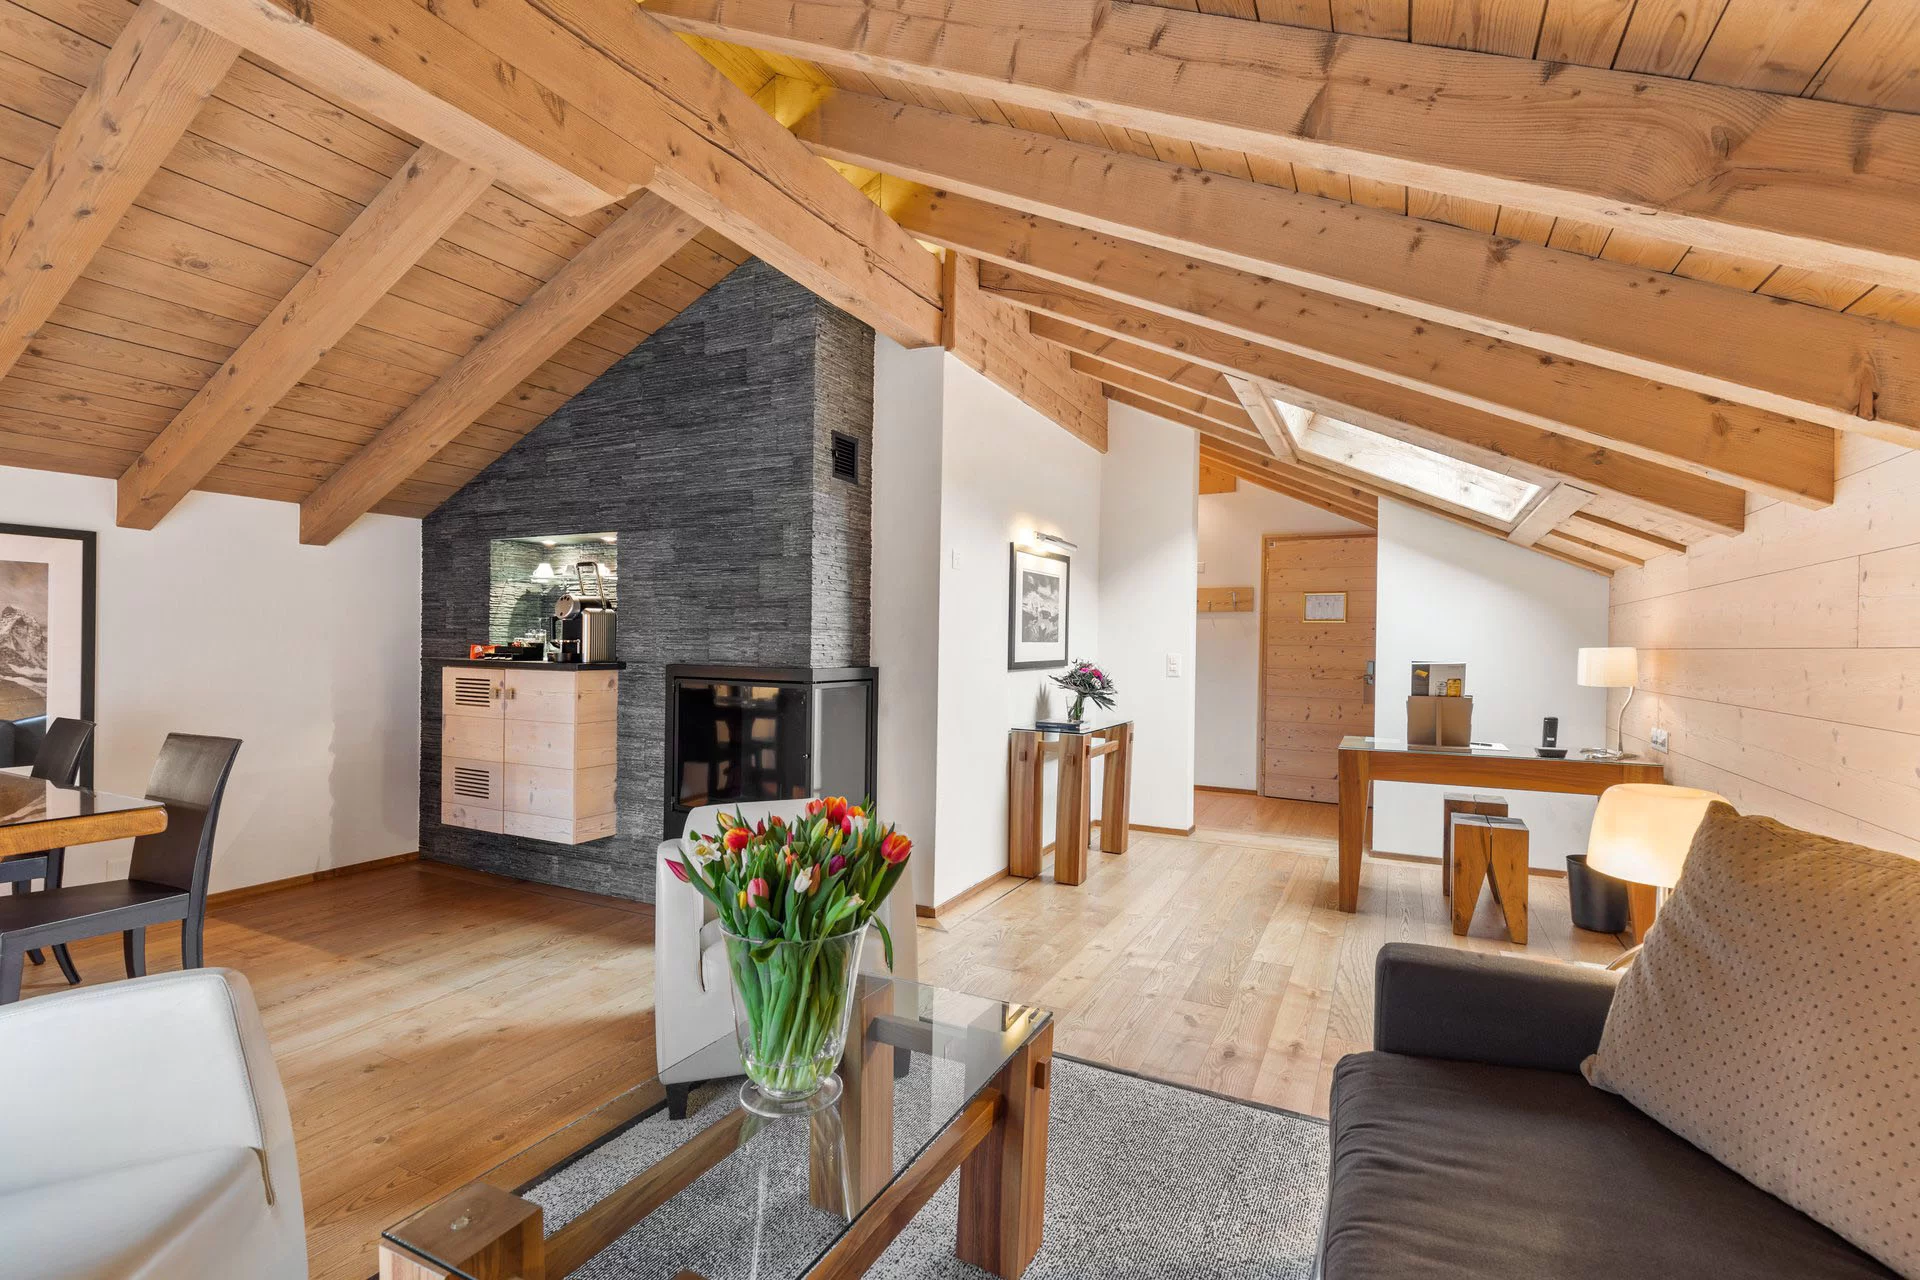 Chalet Suite Living Room Space - Grand Hotel Zermatterhof